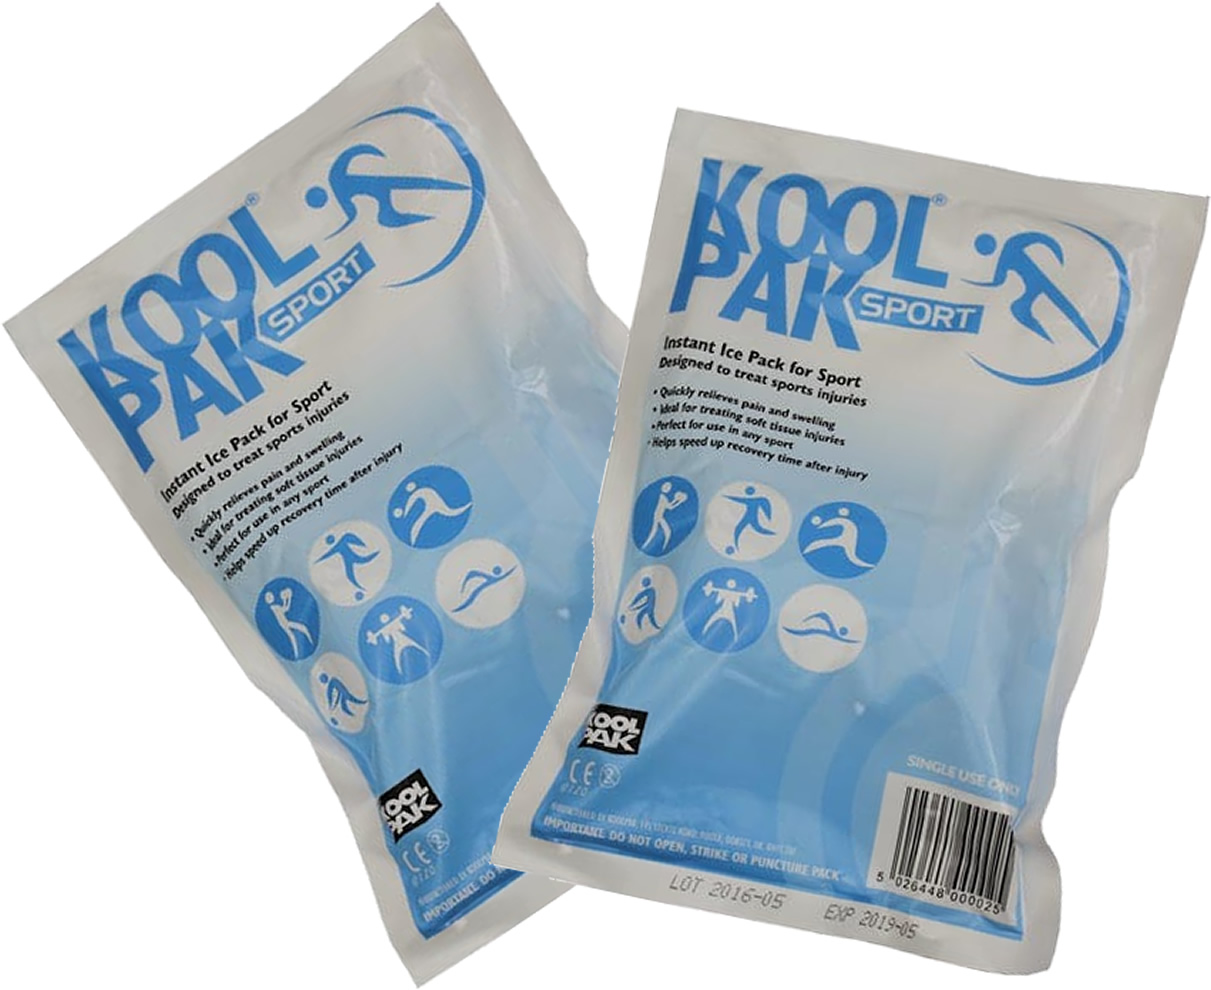 Koolpak Sports Instant Ice Pack (Box of 20)